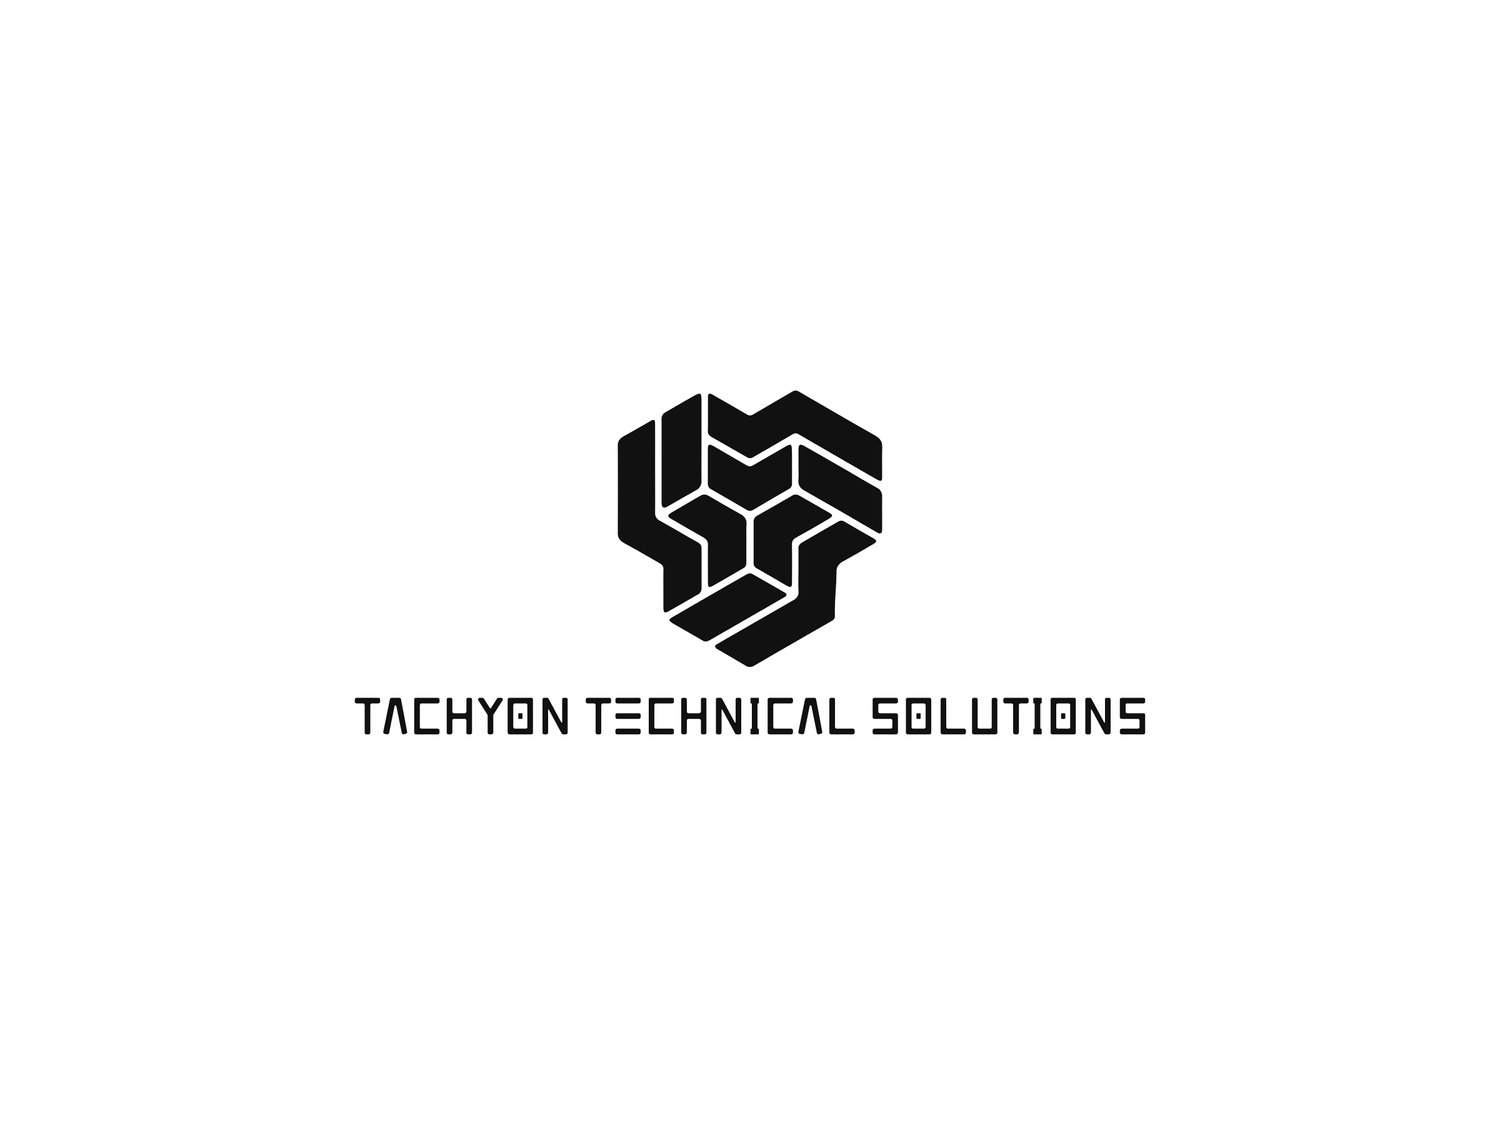 Tachyon Technical Solutions